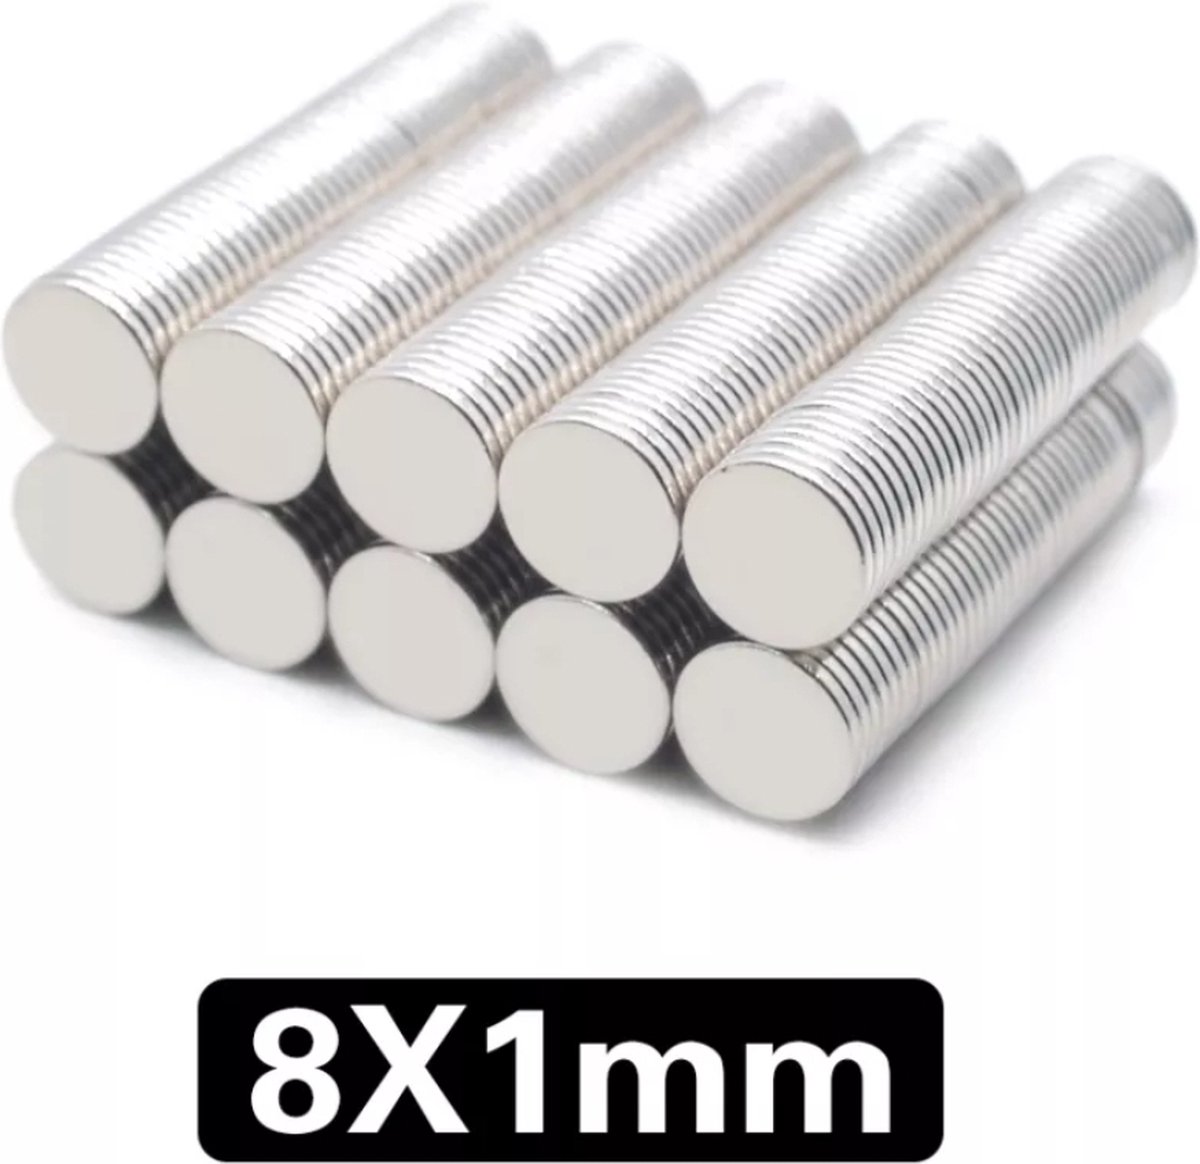 Ronde platte neodymium magneetjes 150 stuks - 8 x 1 mm - zeer sterk - neodymium magneet - koelkast - whiteboard